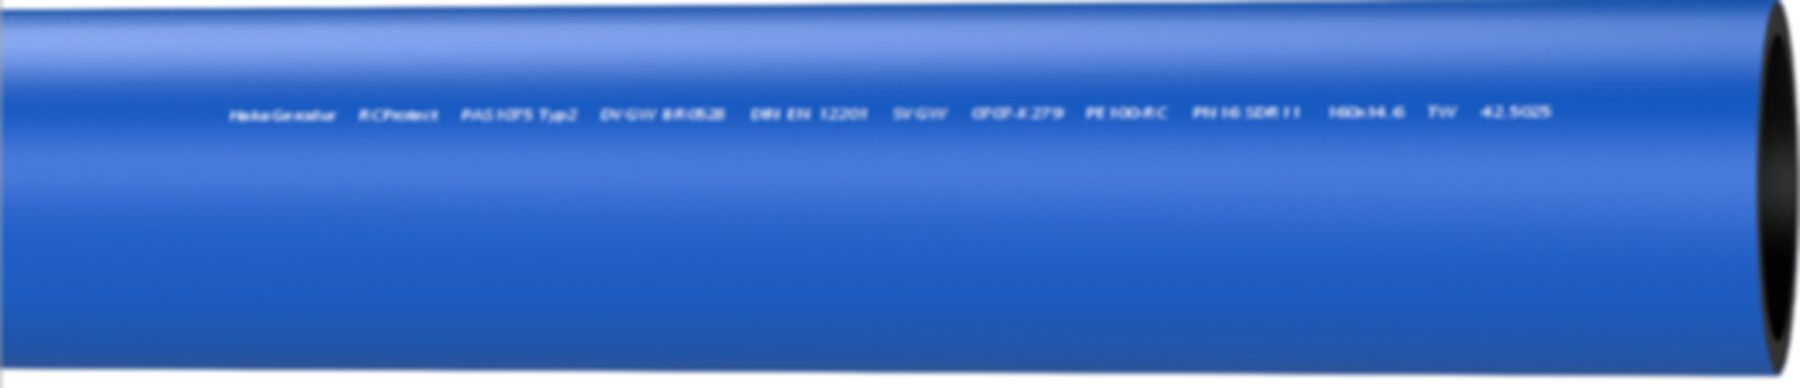 Druckrohr Wasser PE 100RC, SDR 17, PN 10 d 630 x 37.4mm - RCprotect in Stangen